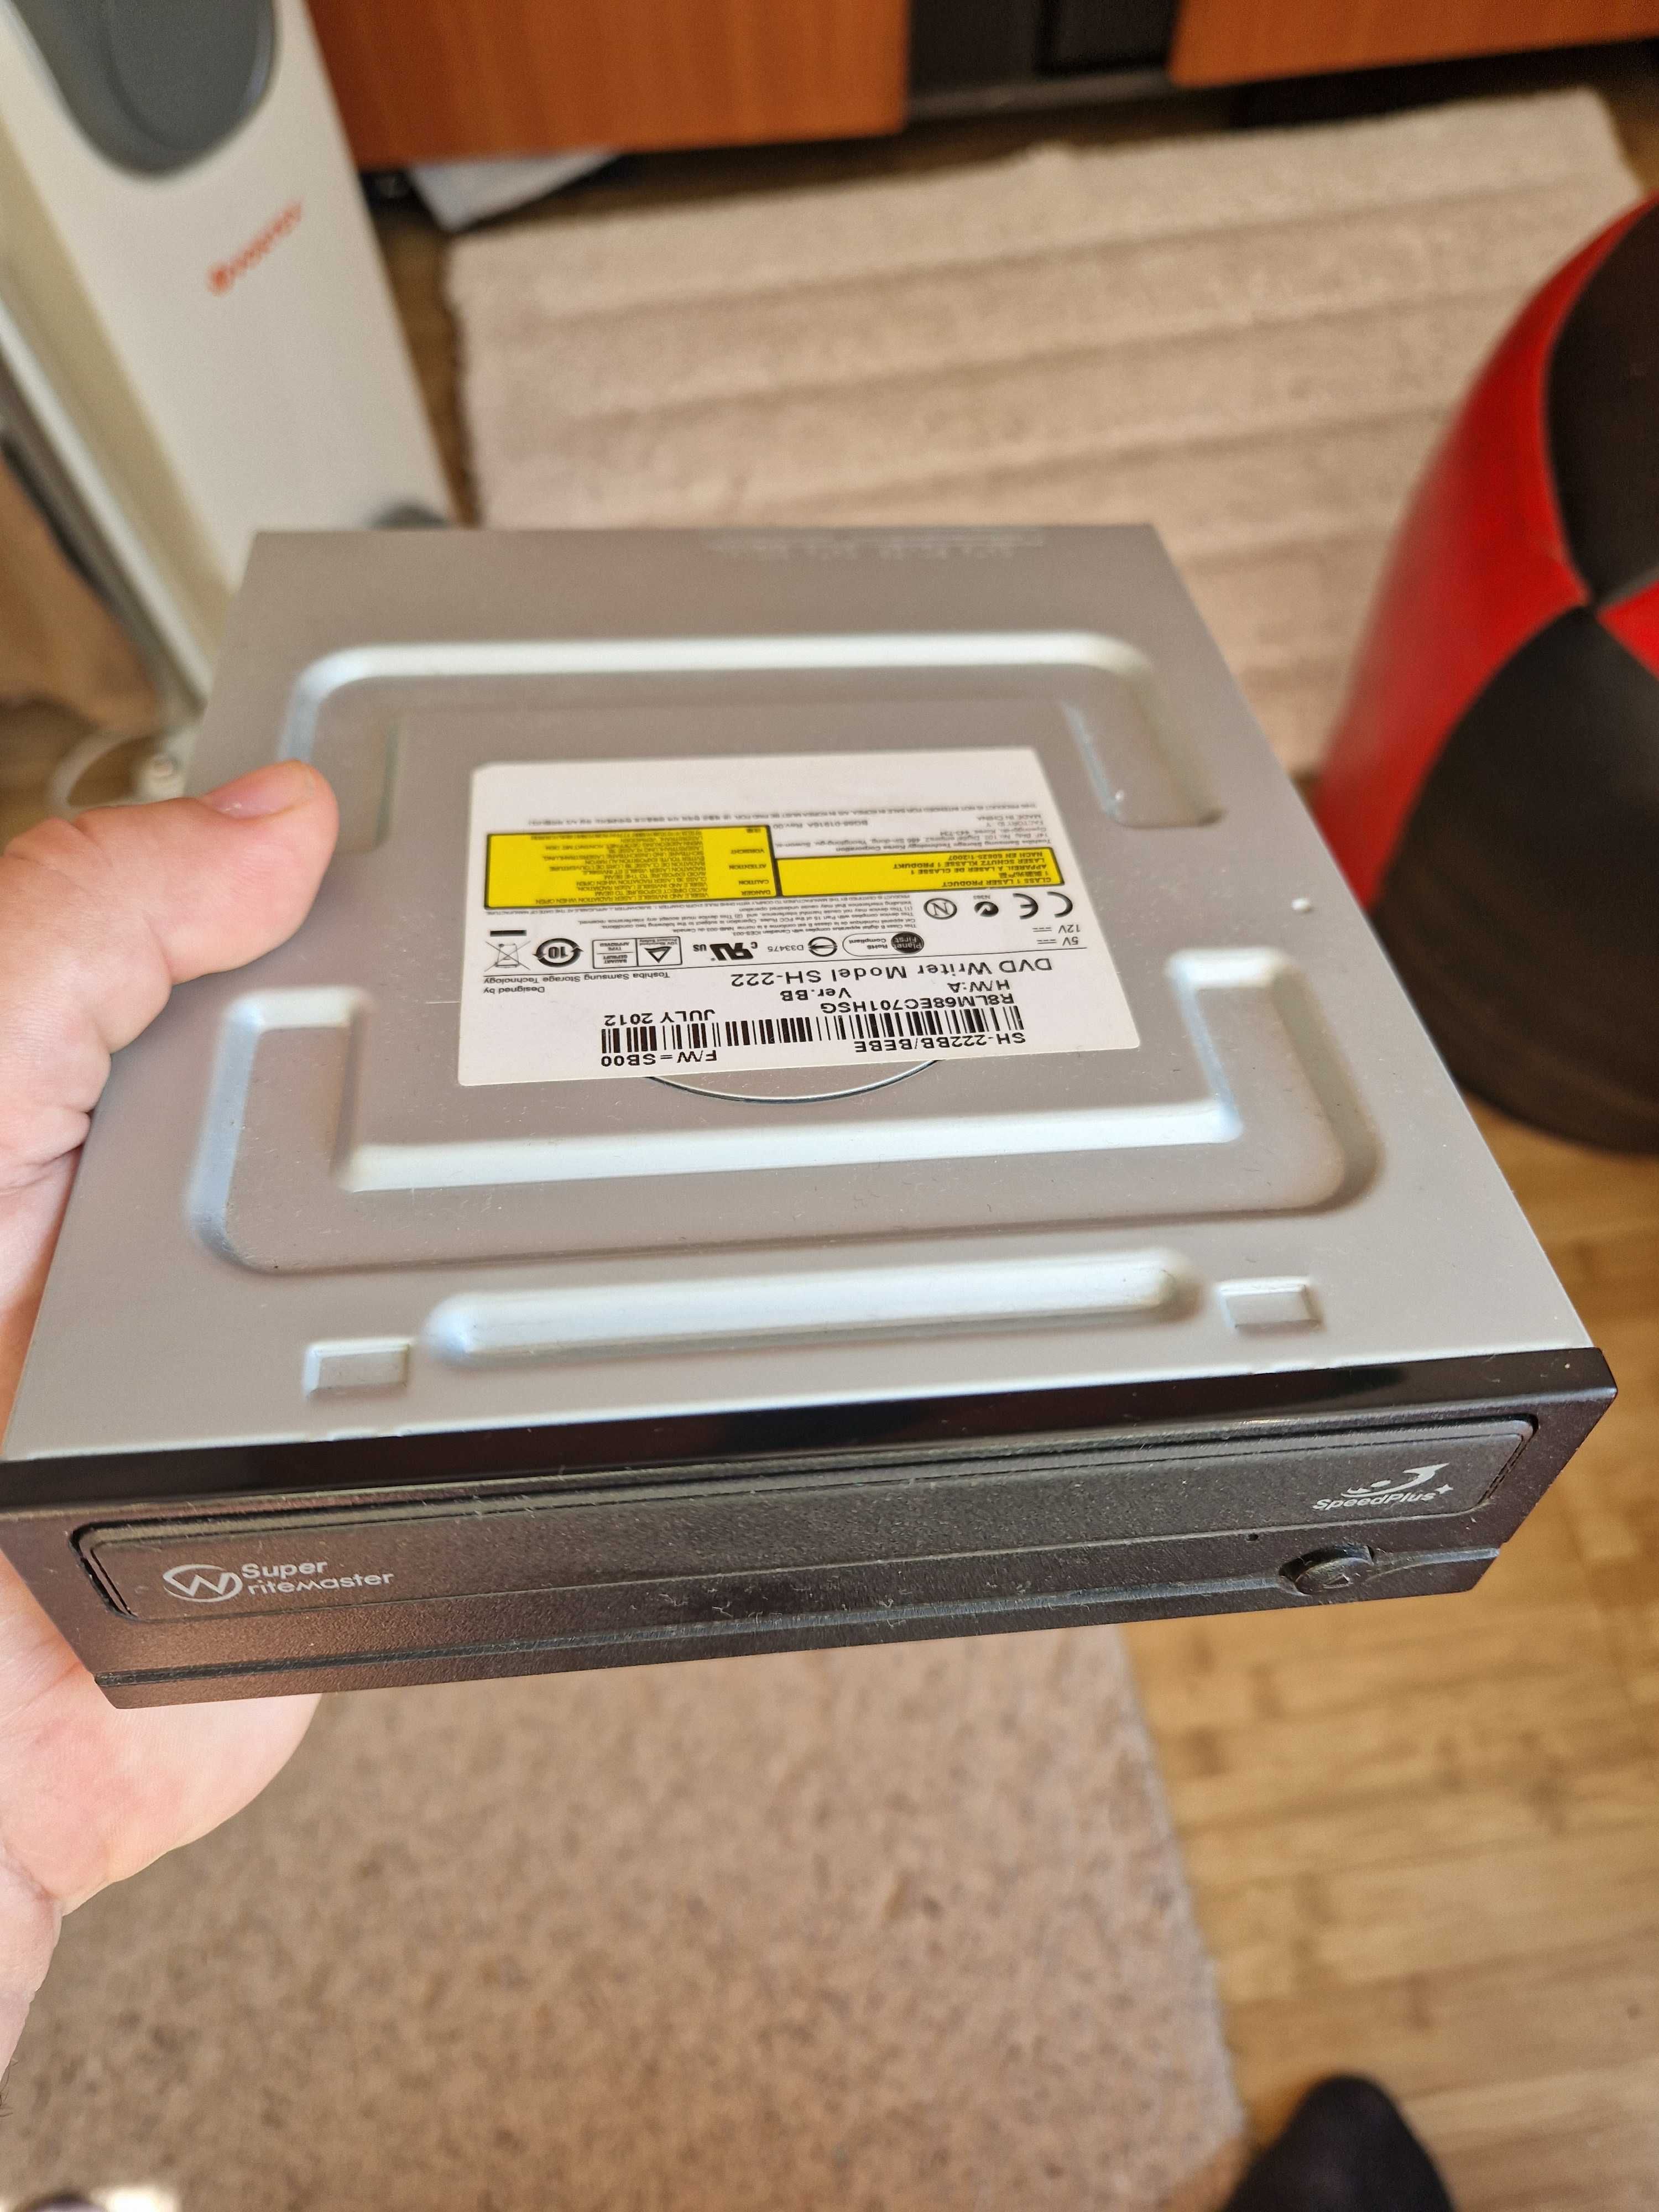 DVD-RW pentru PC Samsung model SH-222